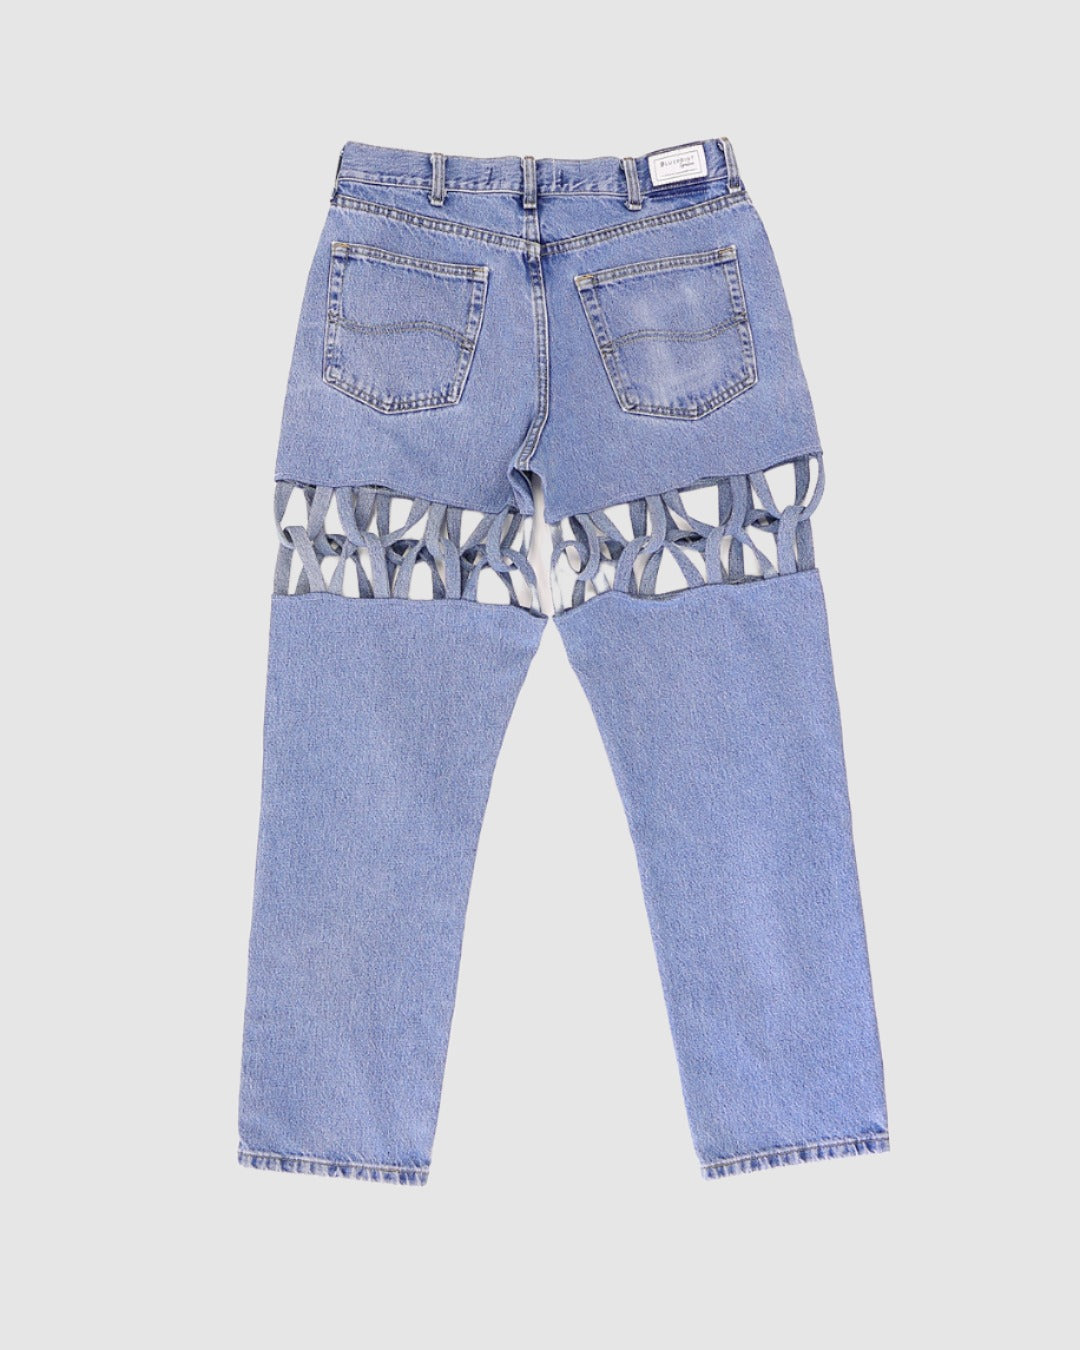 Criss Cross Jeans (size 15)